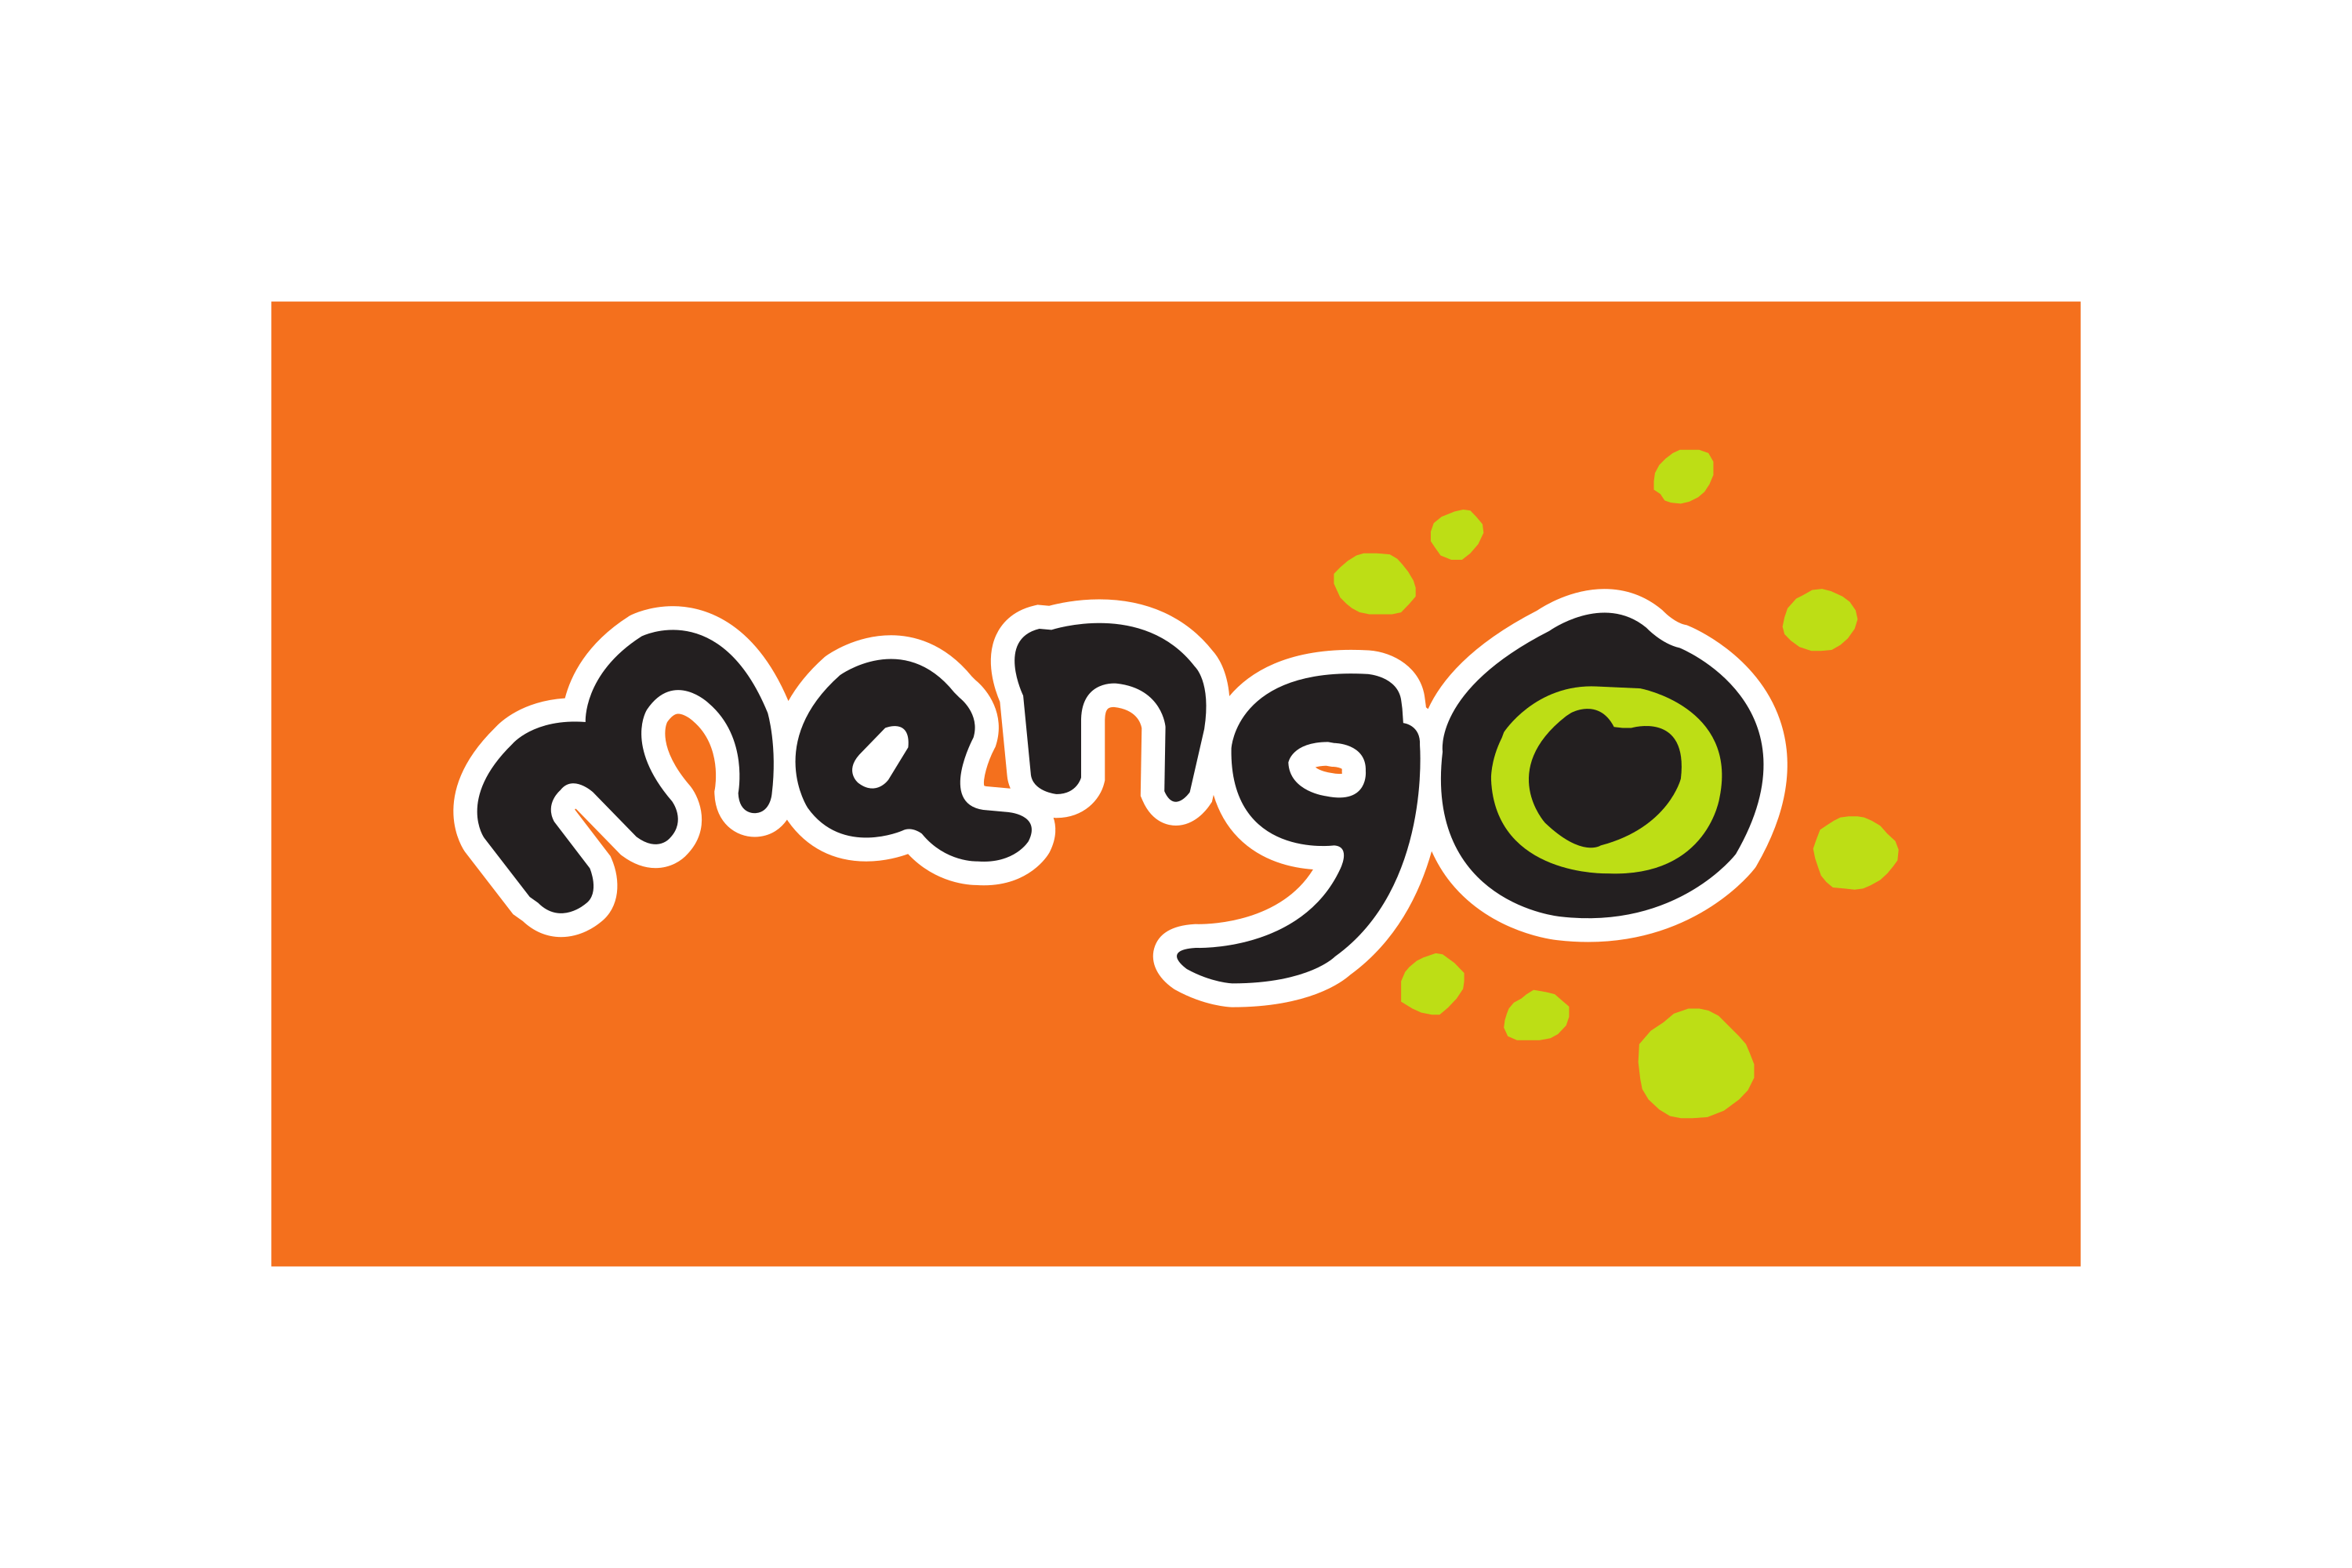 Download Mango Logo In Svg Vector Or Png File Format   Logo.wine - Mango, Transparent background PNG HD thumbnail